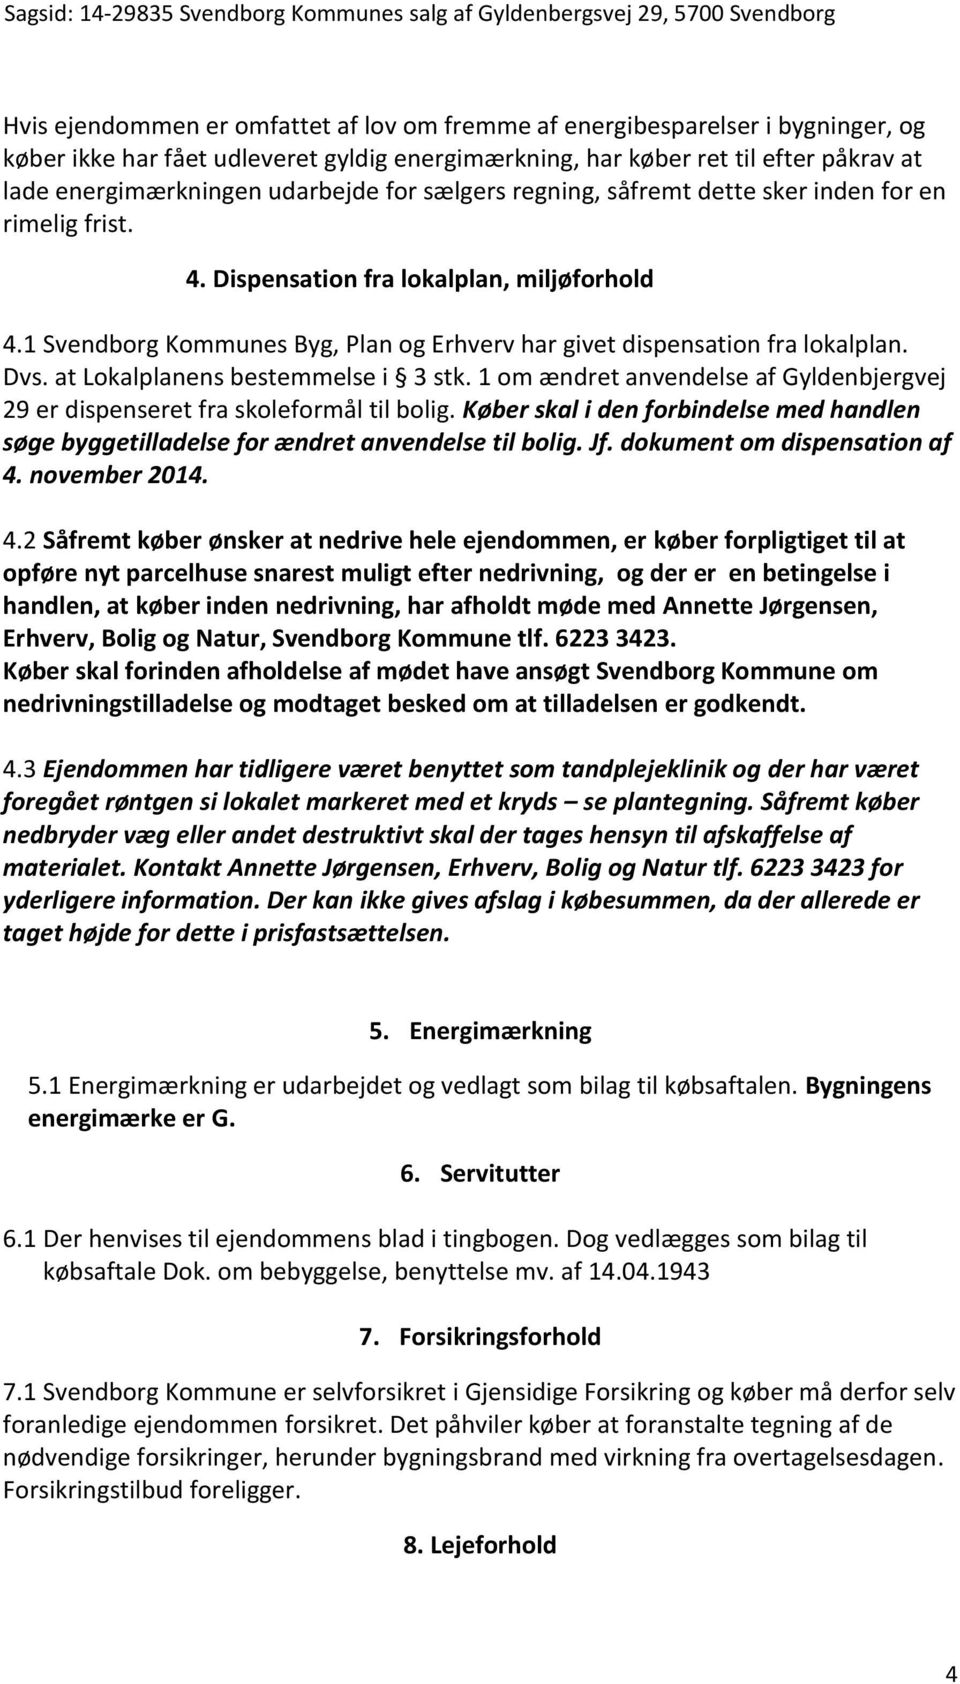 1 Svendborg Kommunes Byg, Plan og Erhverv har givet dispensation fra lokalplan. Dvs. at Lokalplanens bestemmelse i 3 stk.